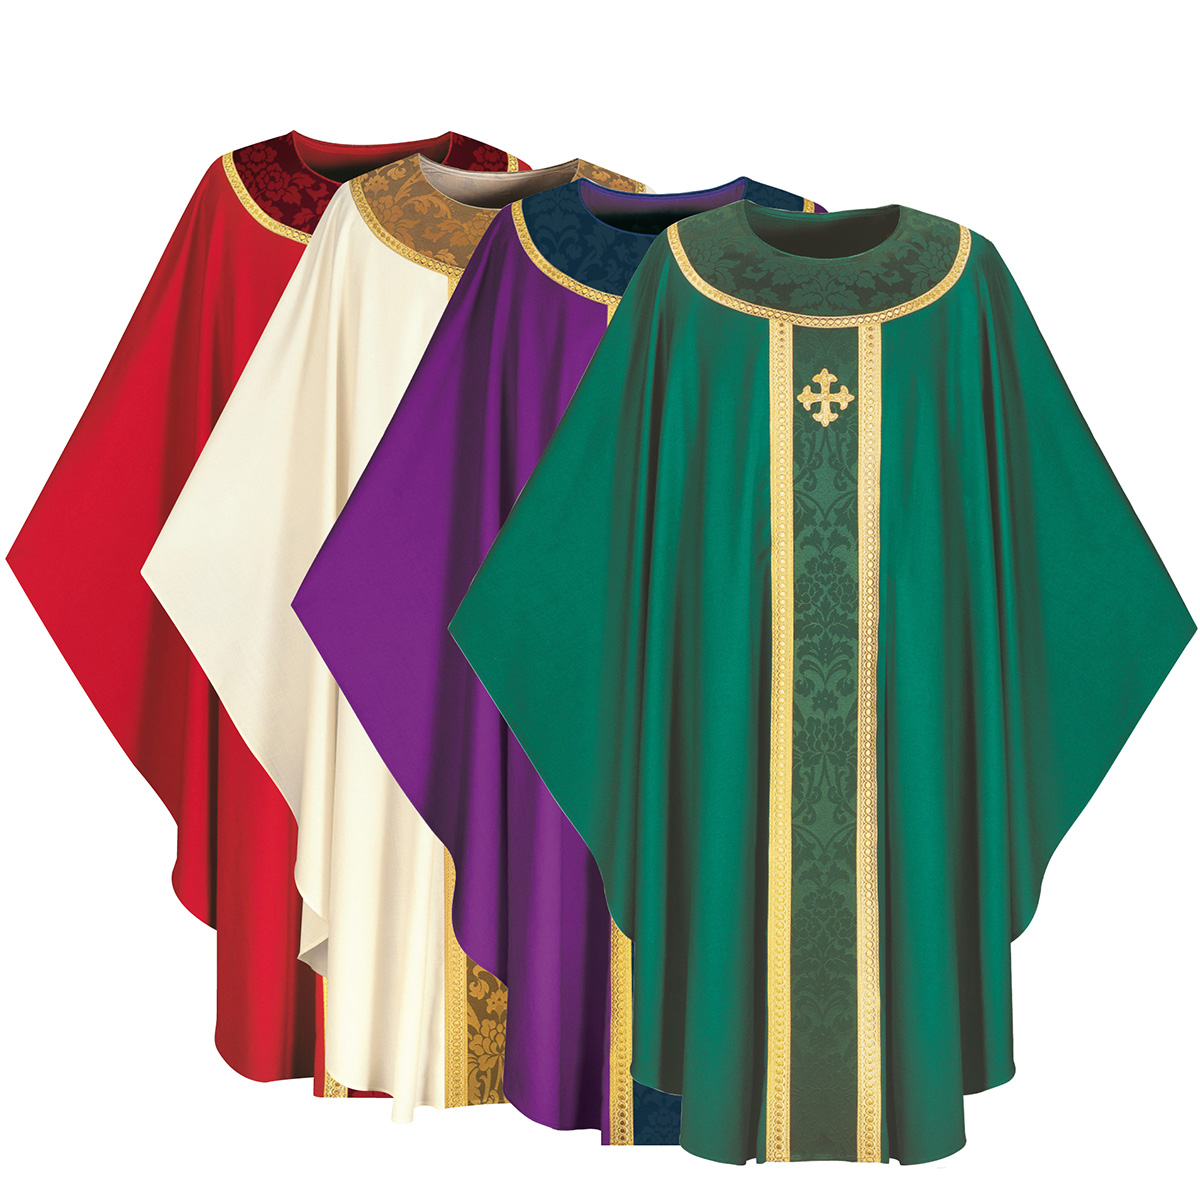 Slabbinck Gothic Chasuble with Brugia Fabric – Set of 4 Colors